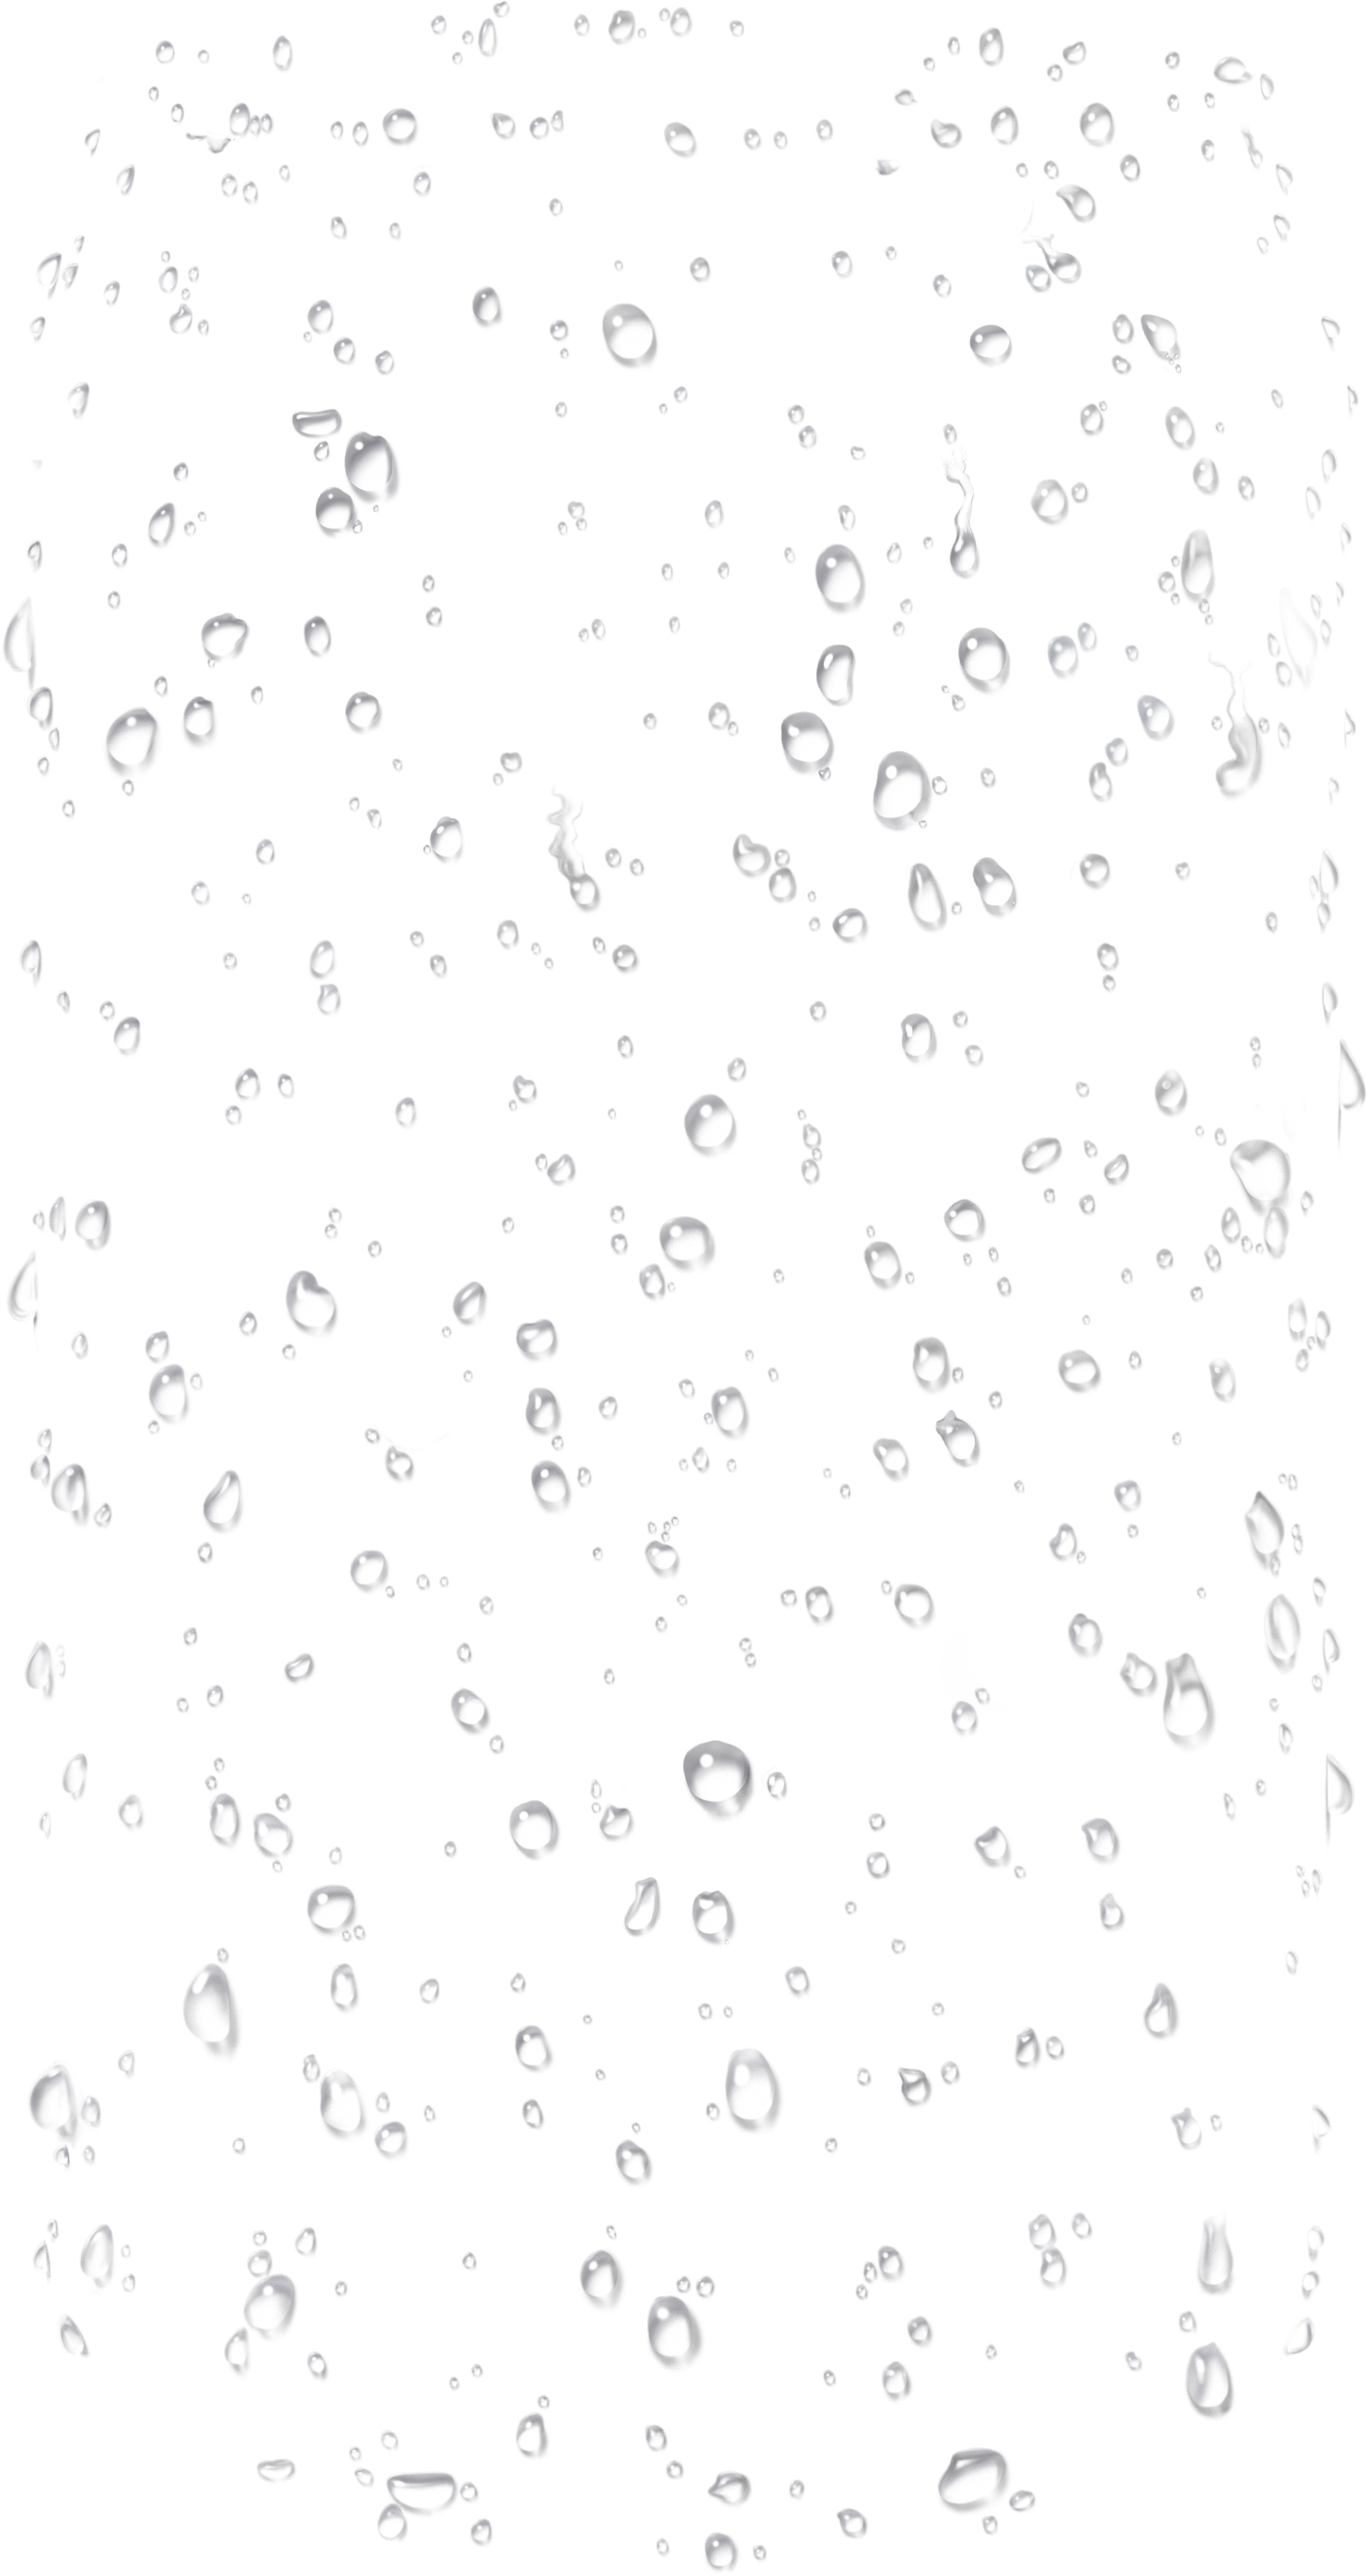 Water Drops PNG Transparent